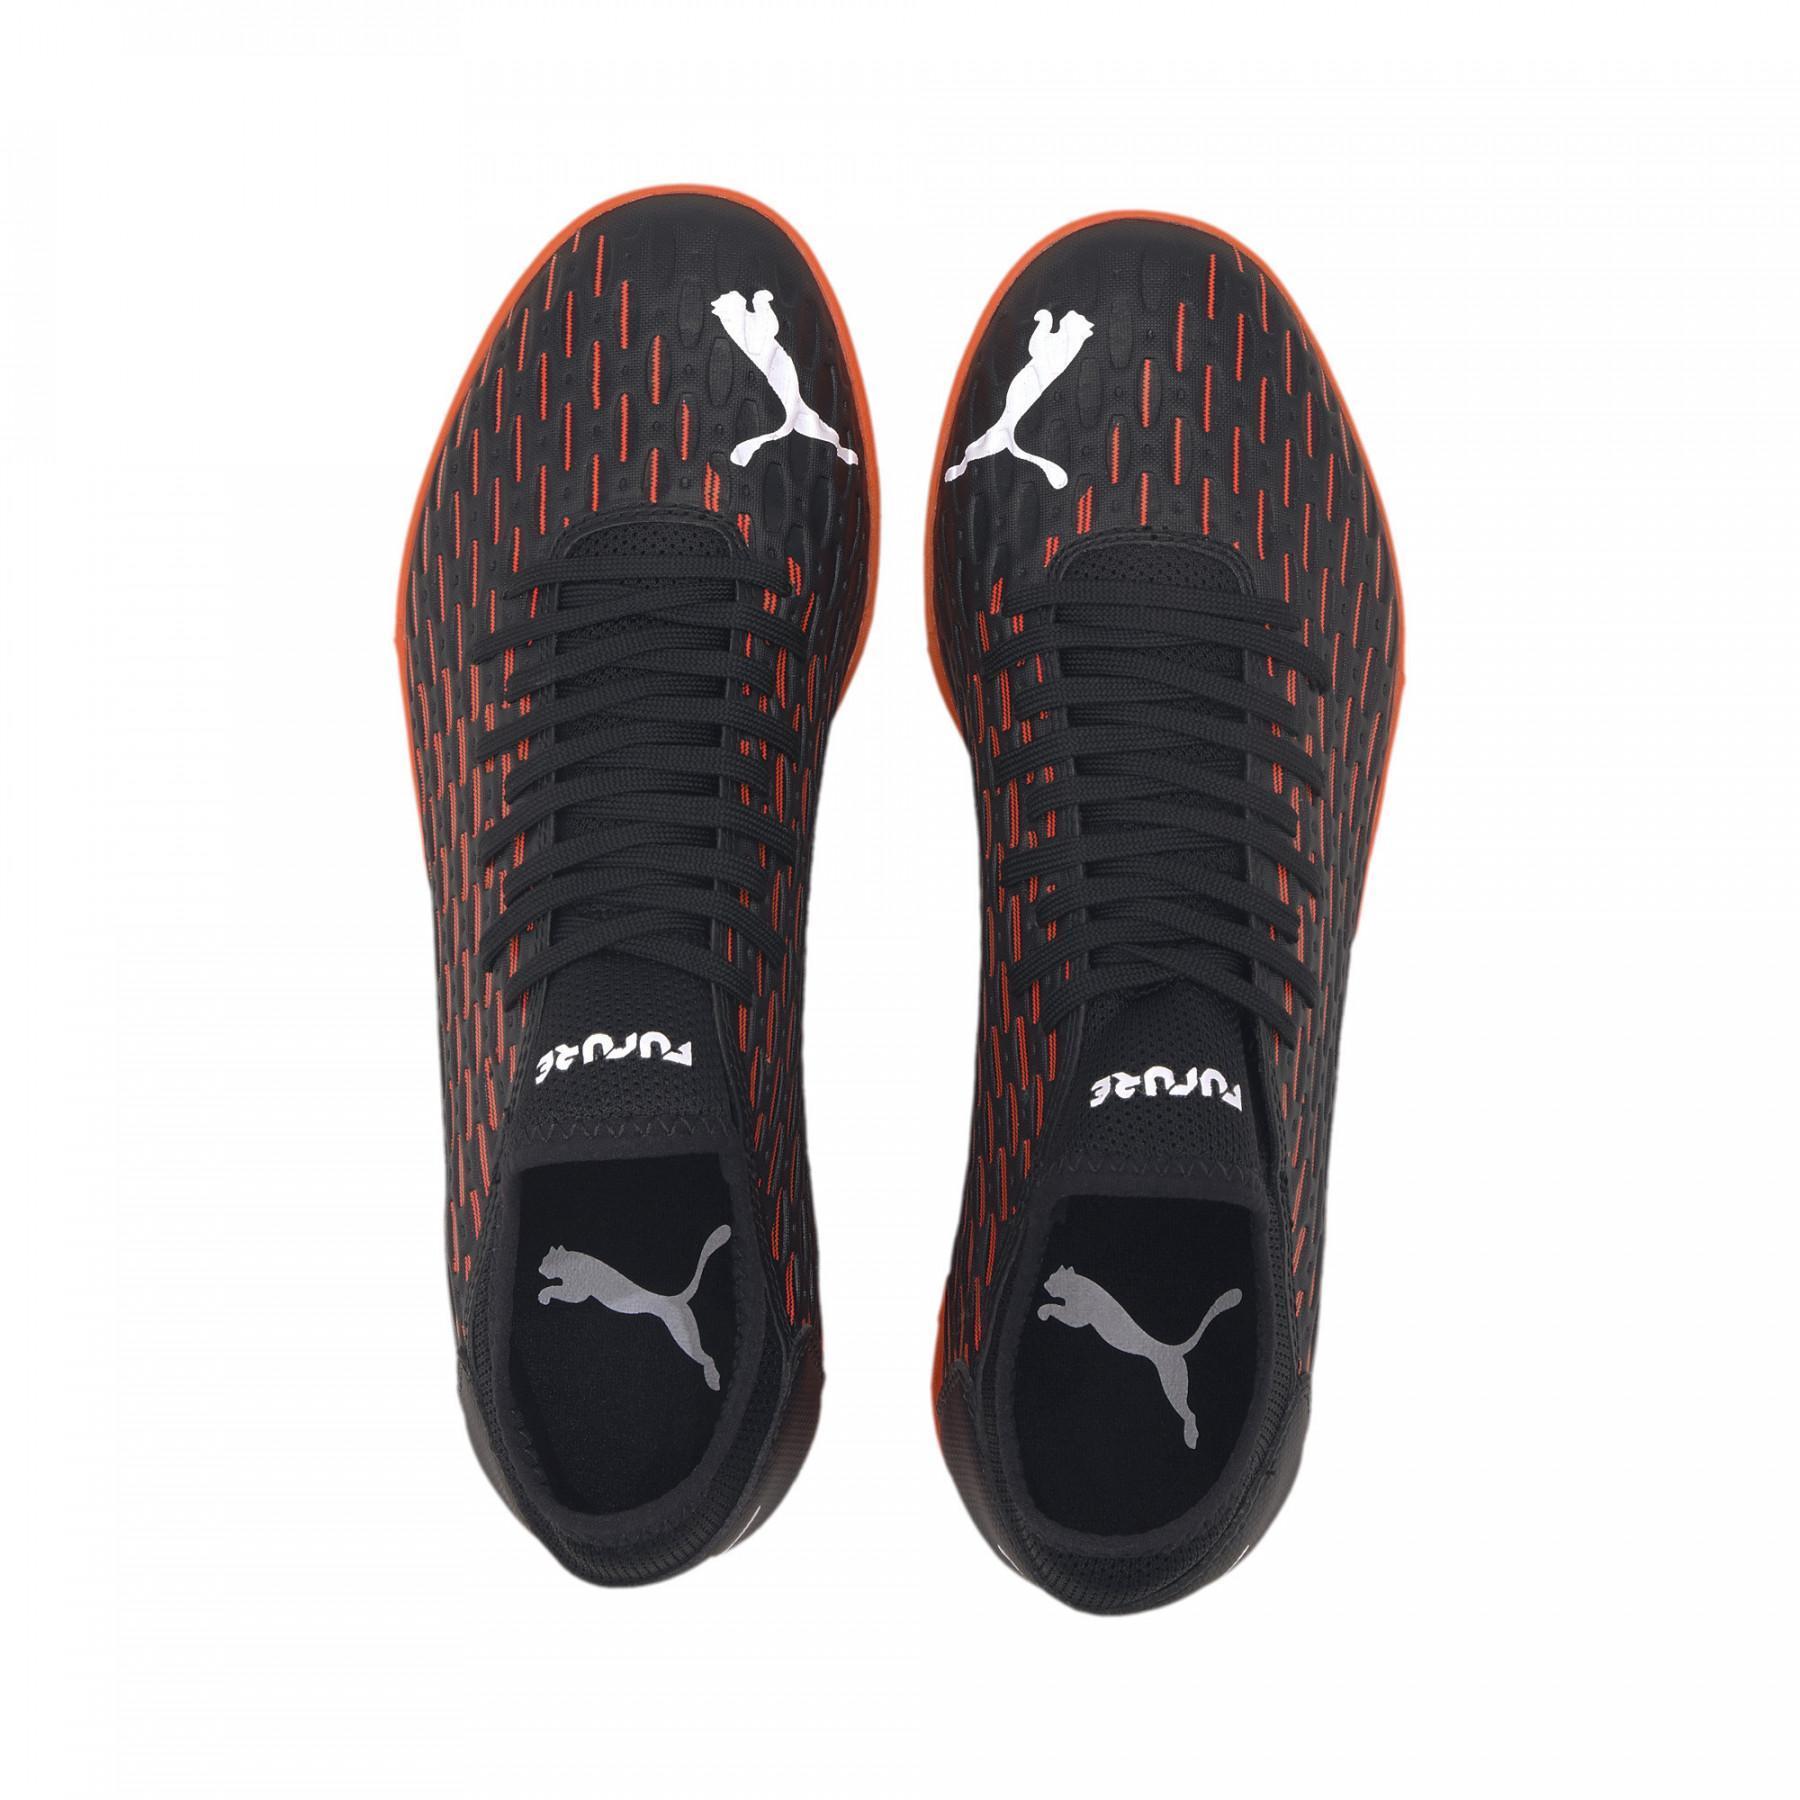 Sapatos Puma Future 6.4 TT